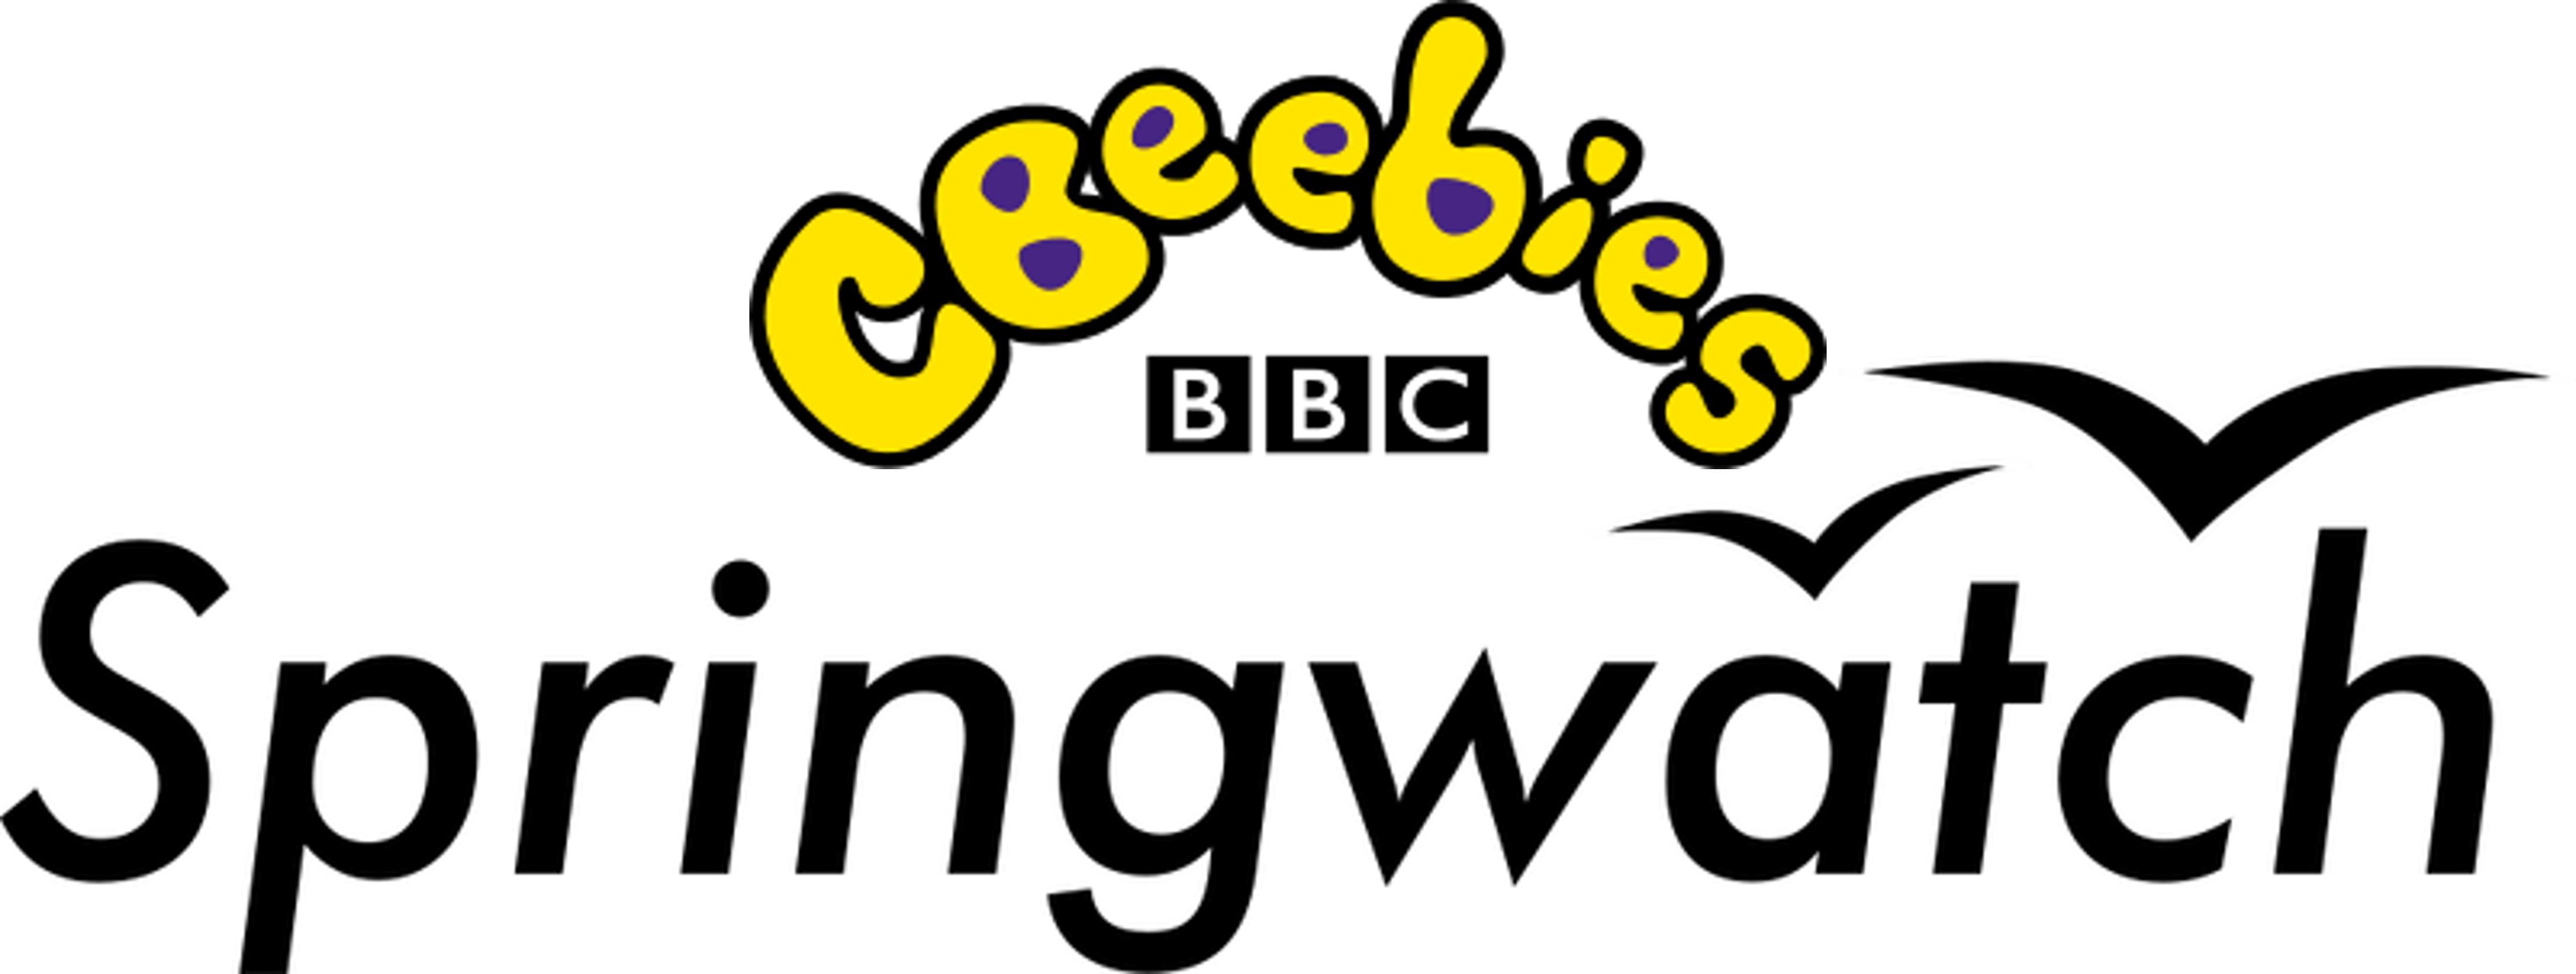 CBeebies Springwatch logo.png